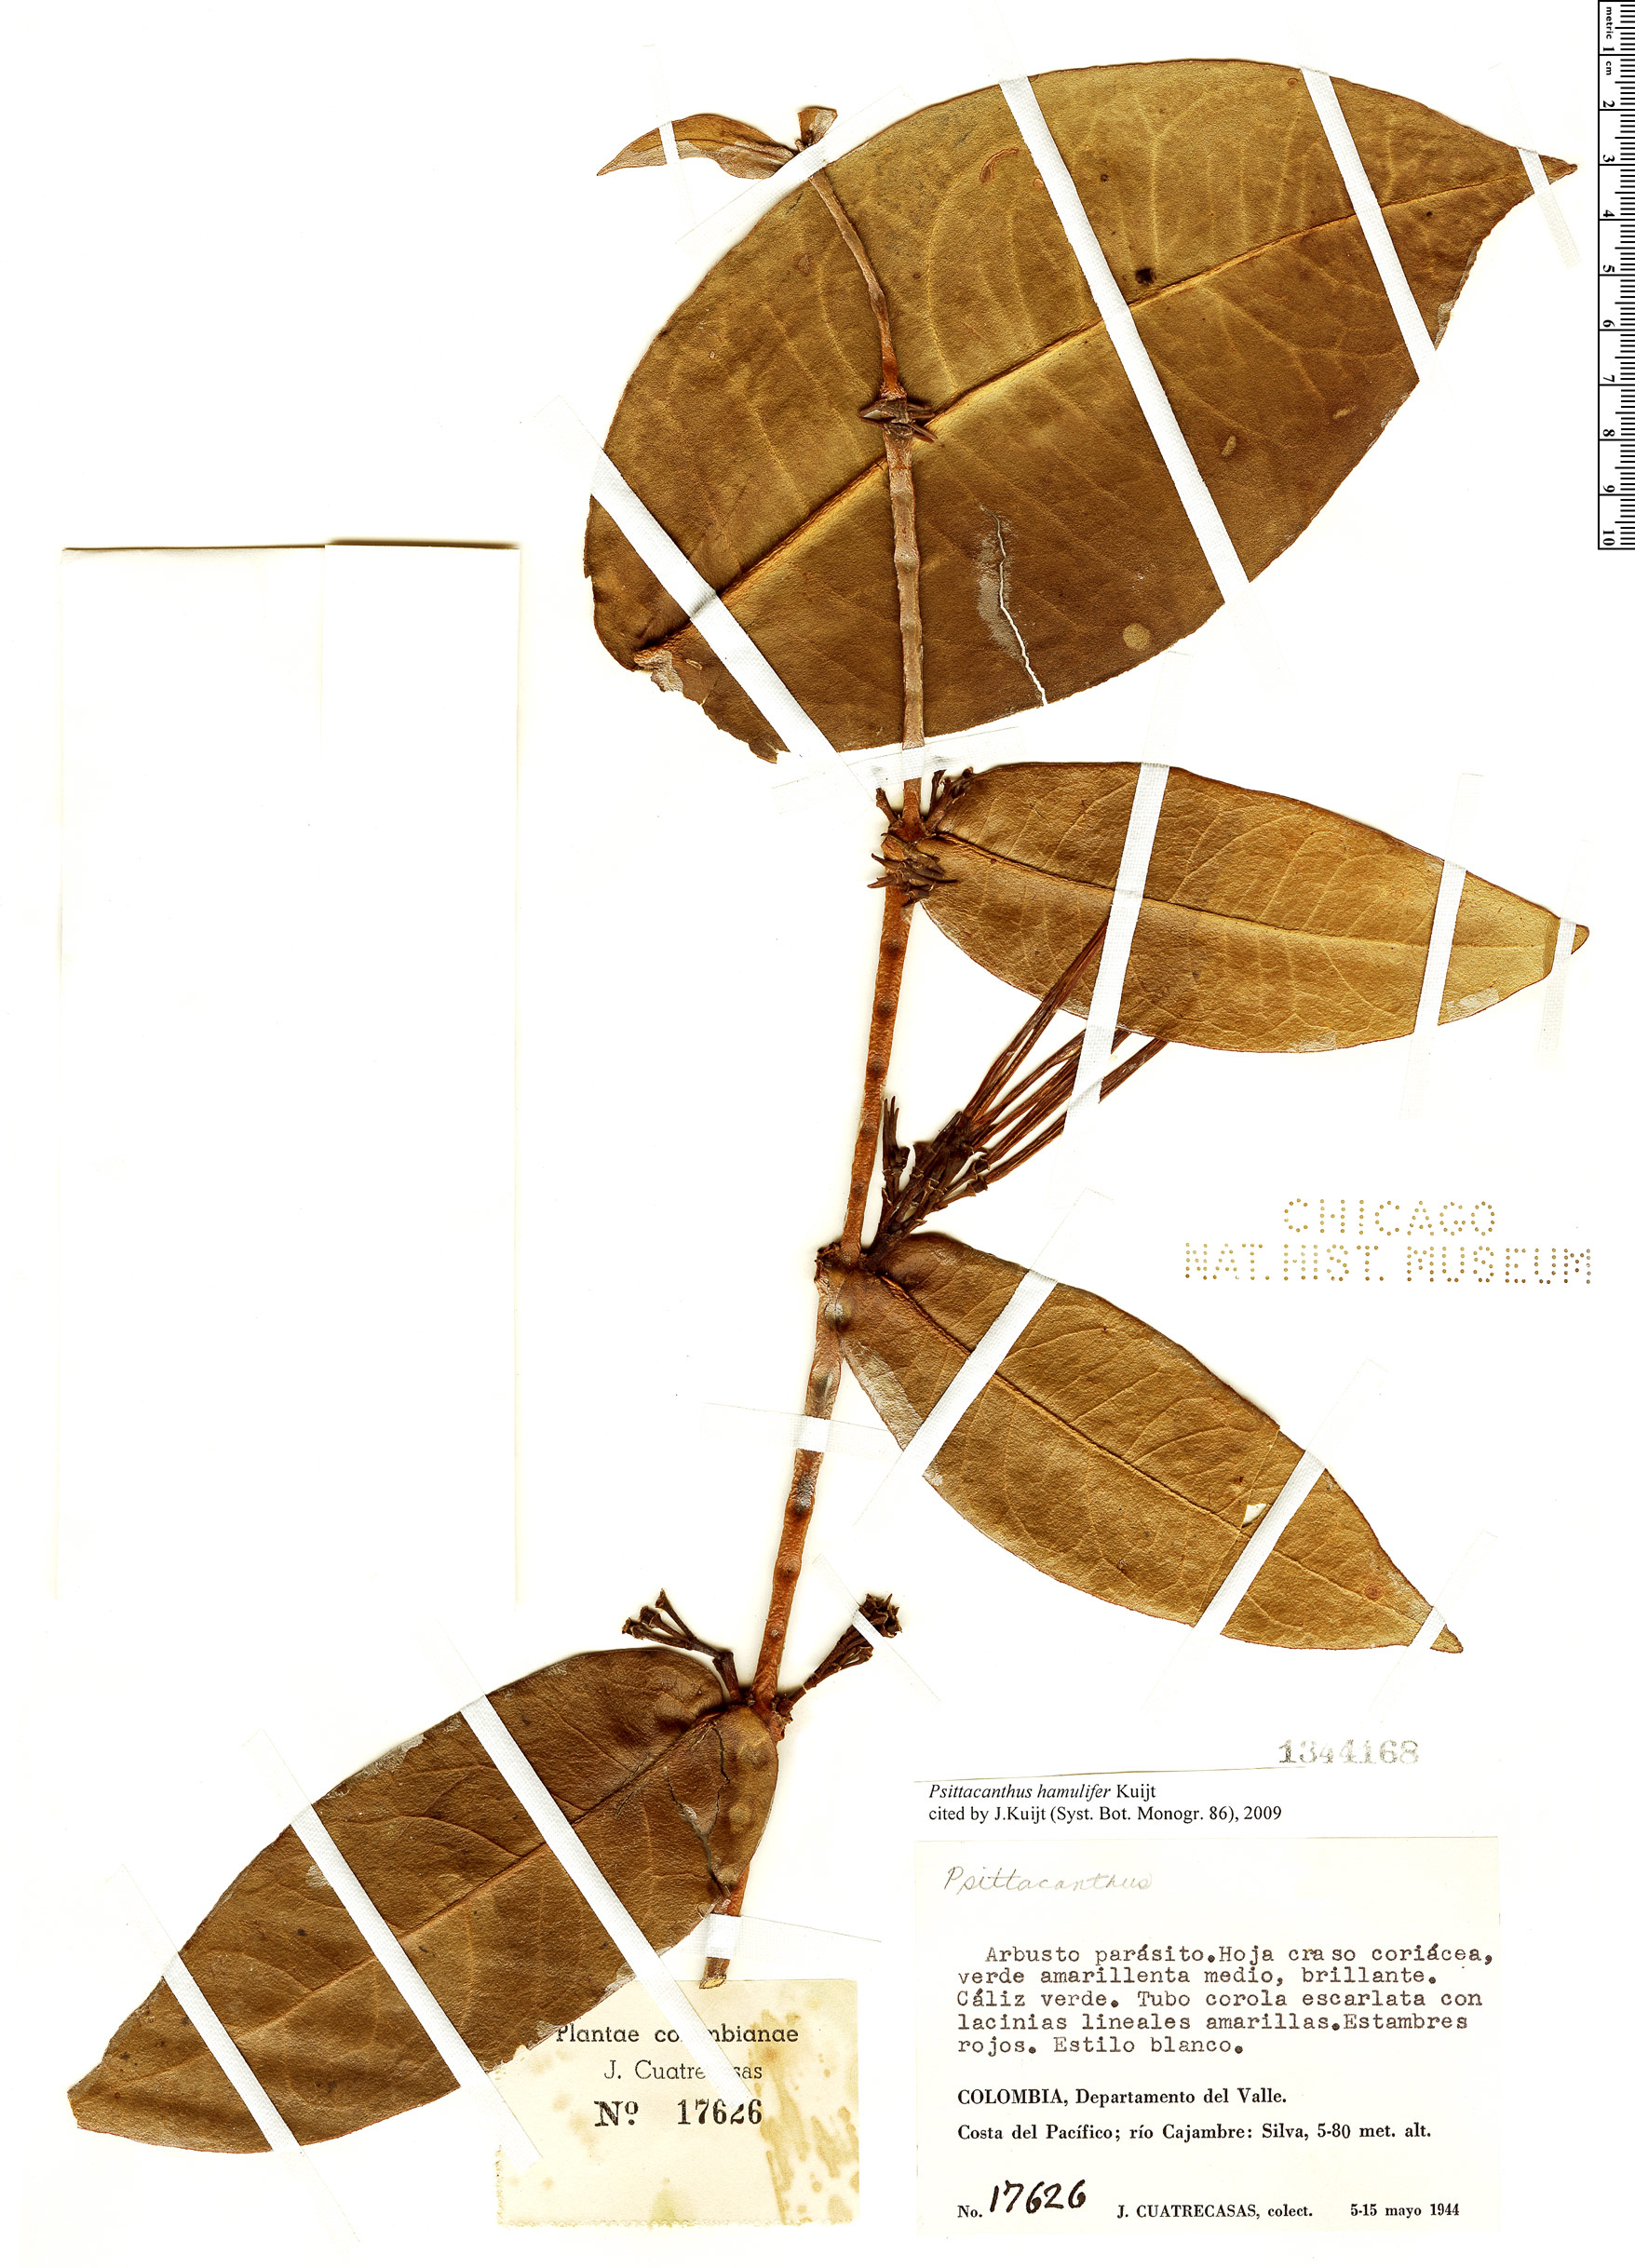 Psittacanthus hamulifer image